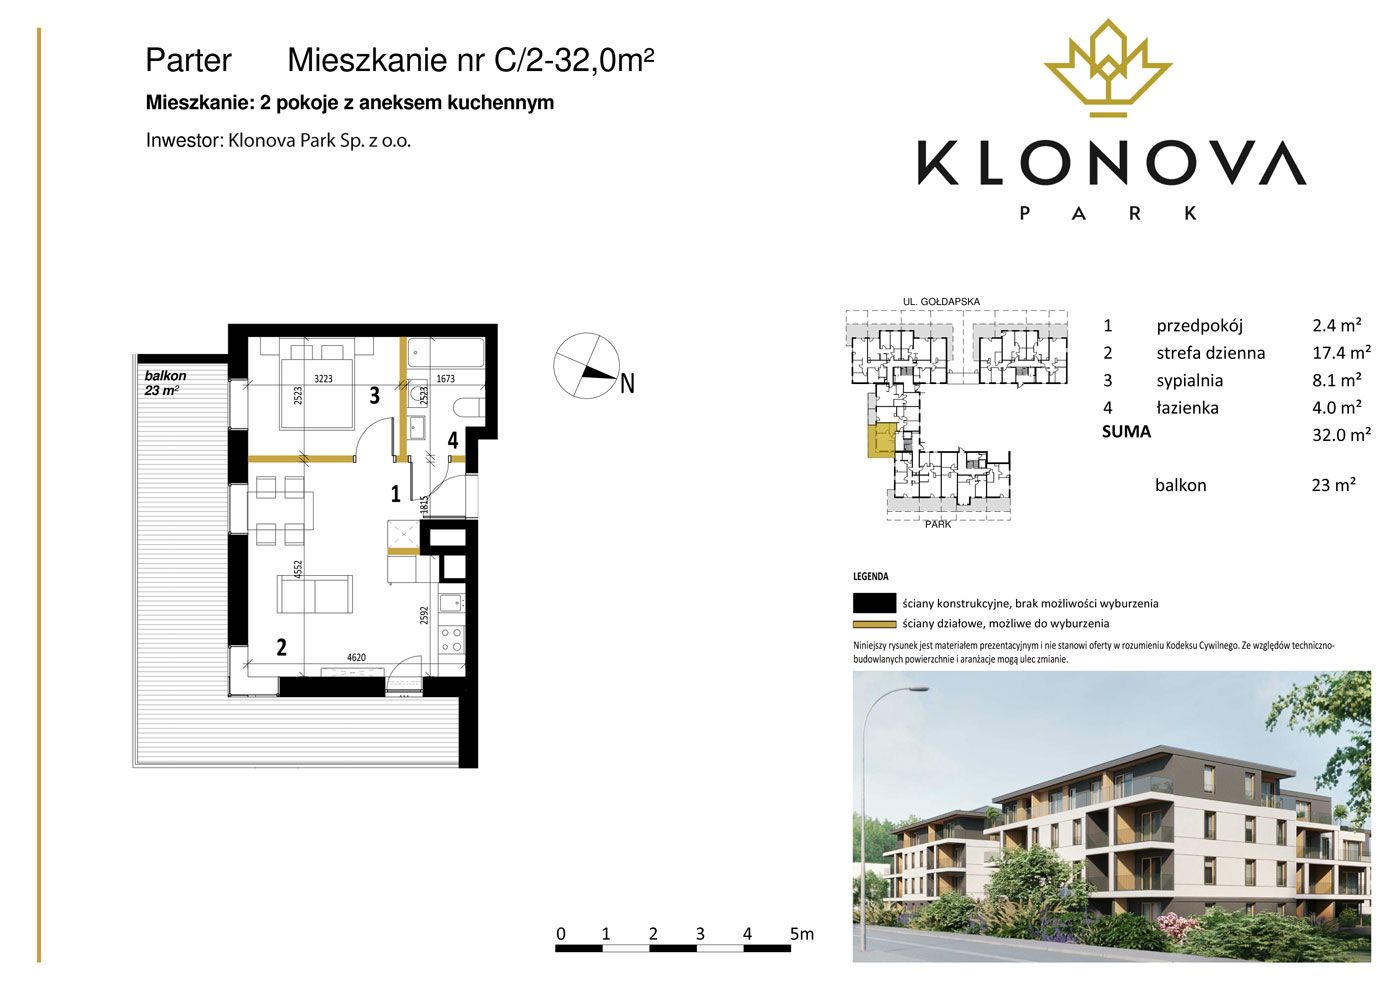 Apartamenty Klonova Park - Plan mieszkania C/2